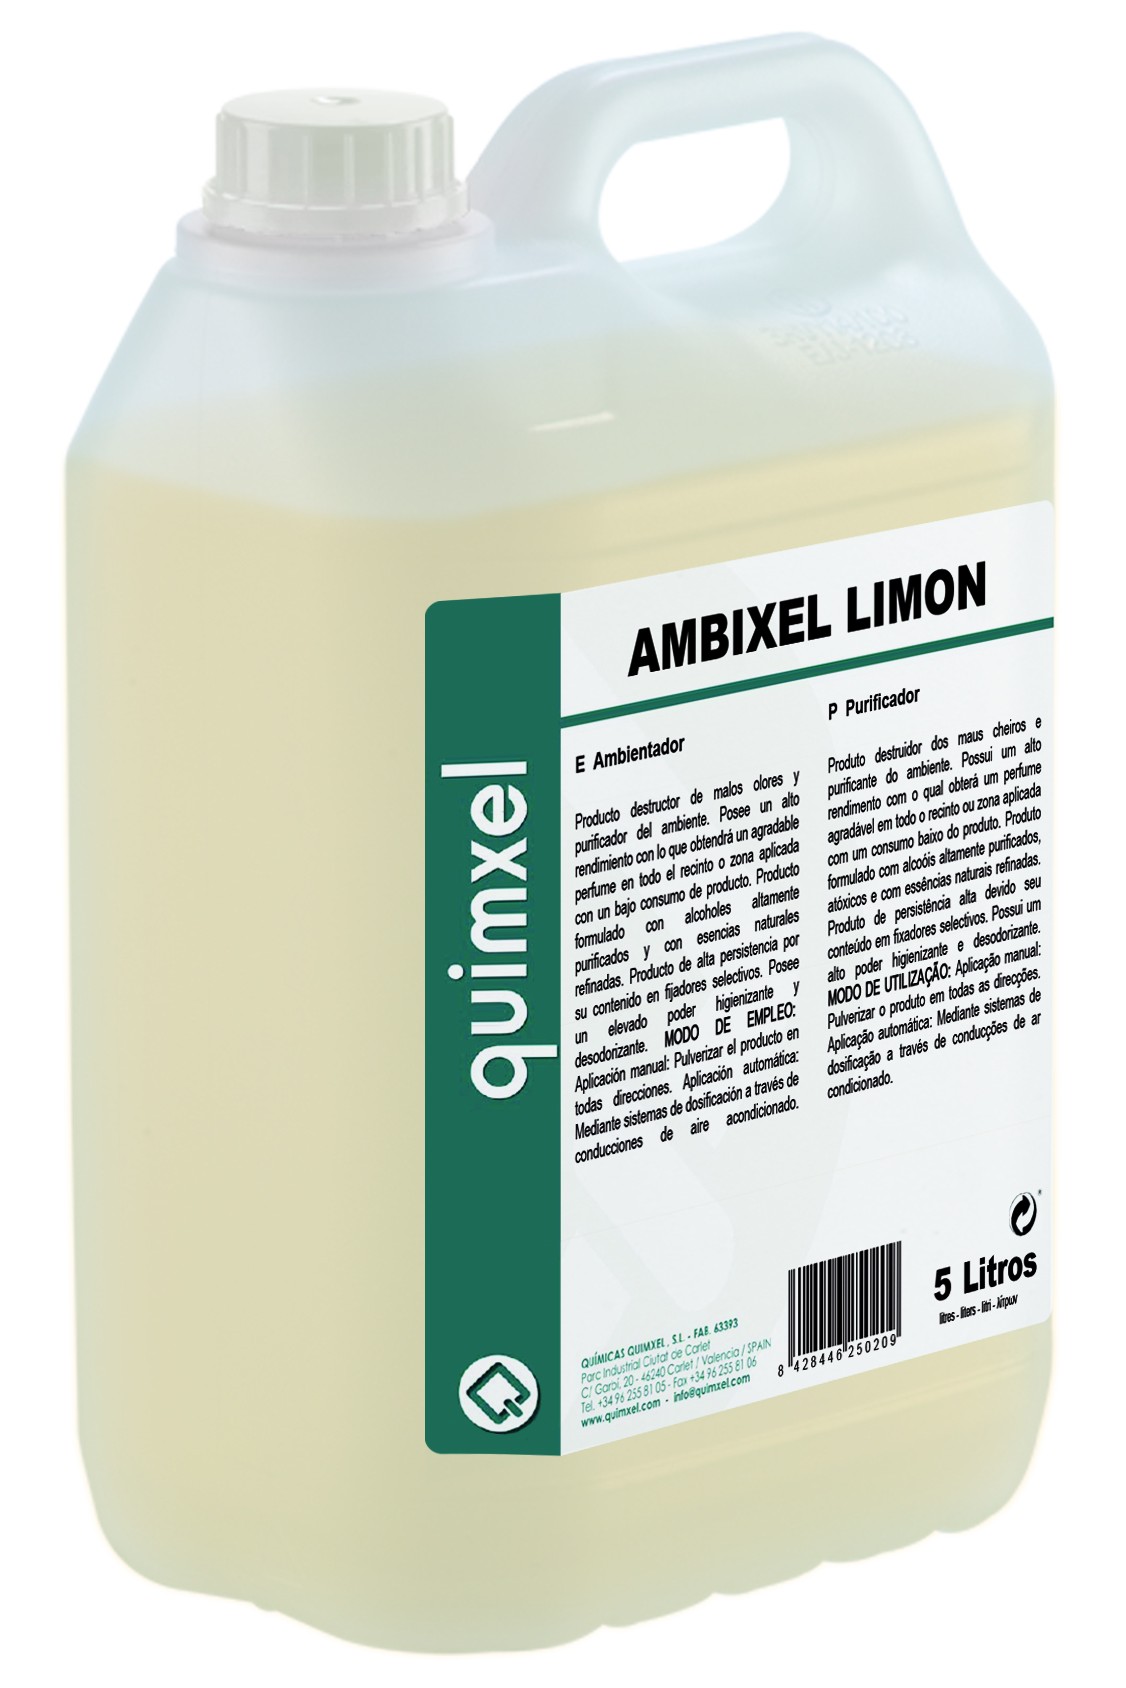 Ambientador Limón. AMBIXEL LIMÓN 750 ml y 5 LTS